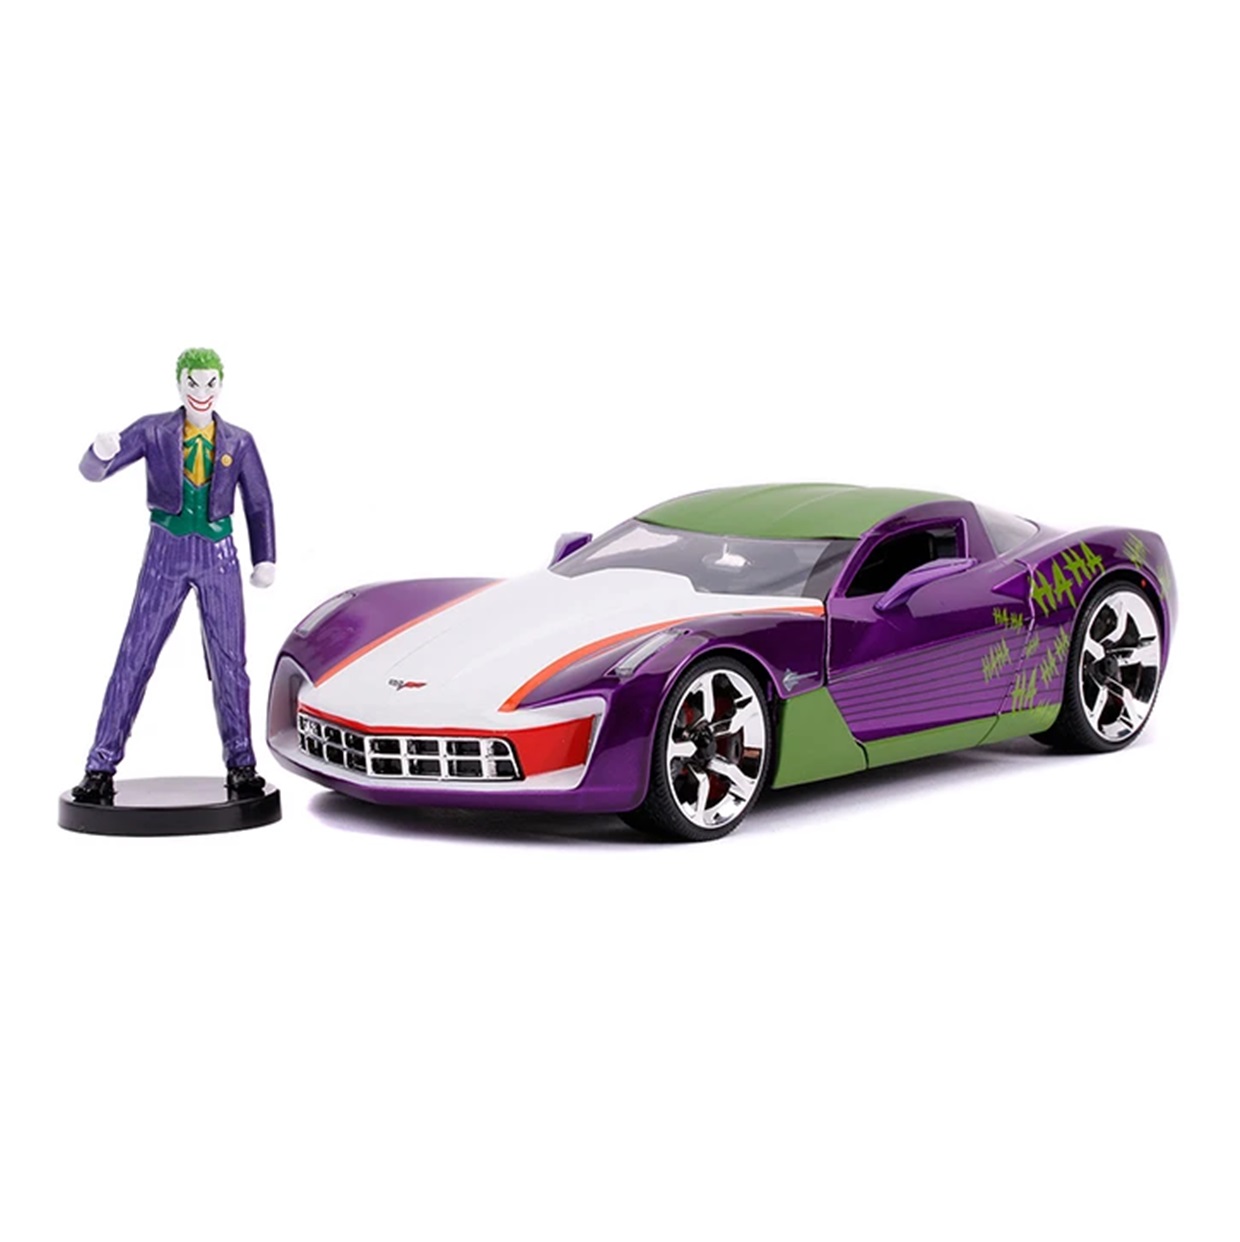 The Joker & 2009 Chevy Corvette Stingray Dc Comics Jada Toys